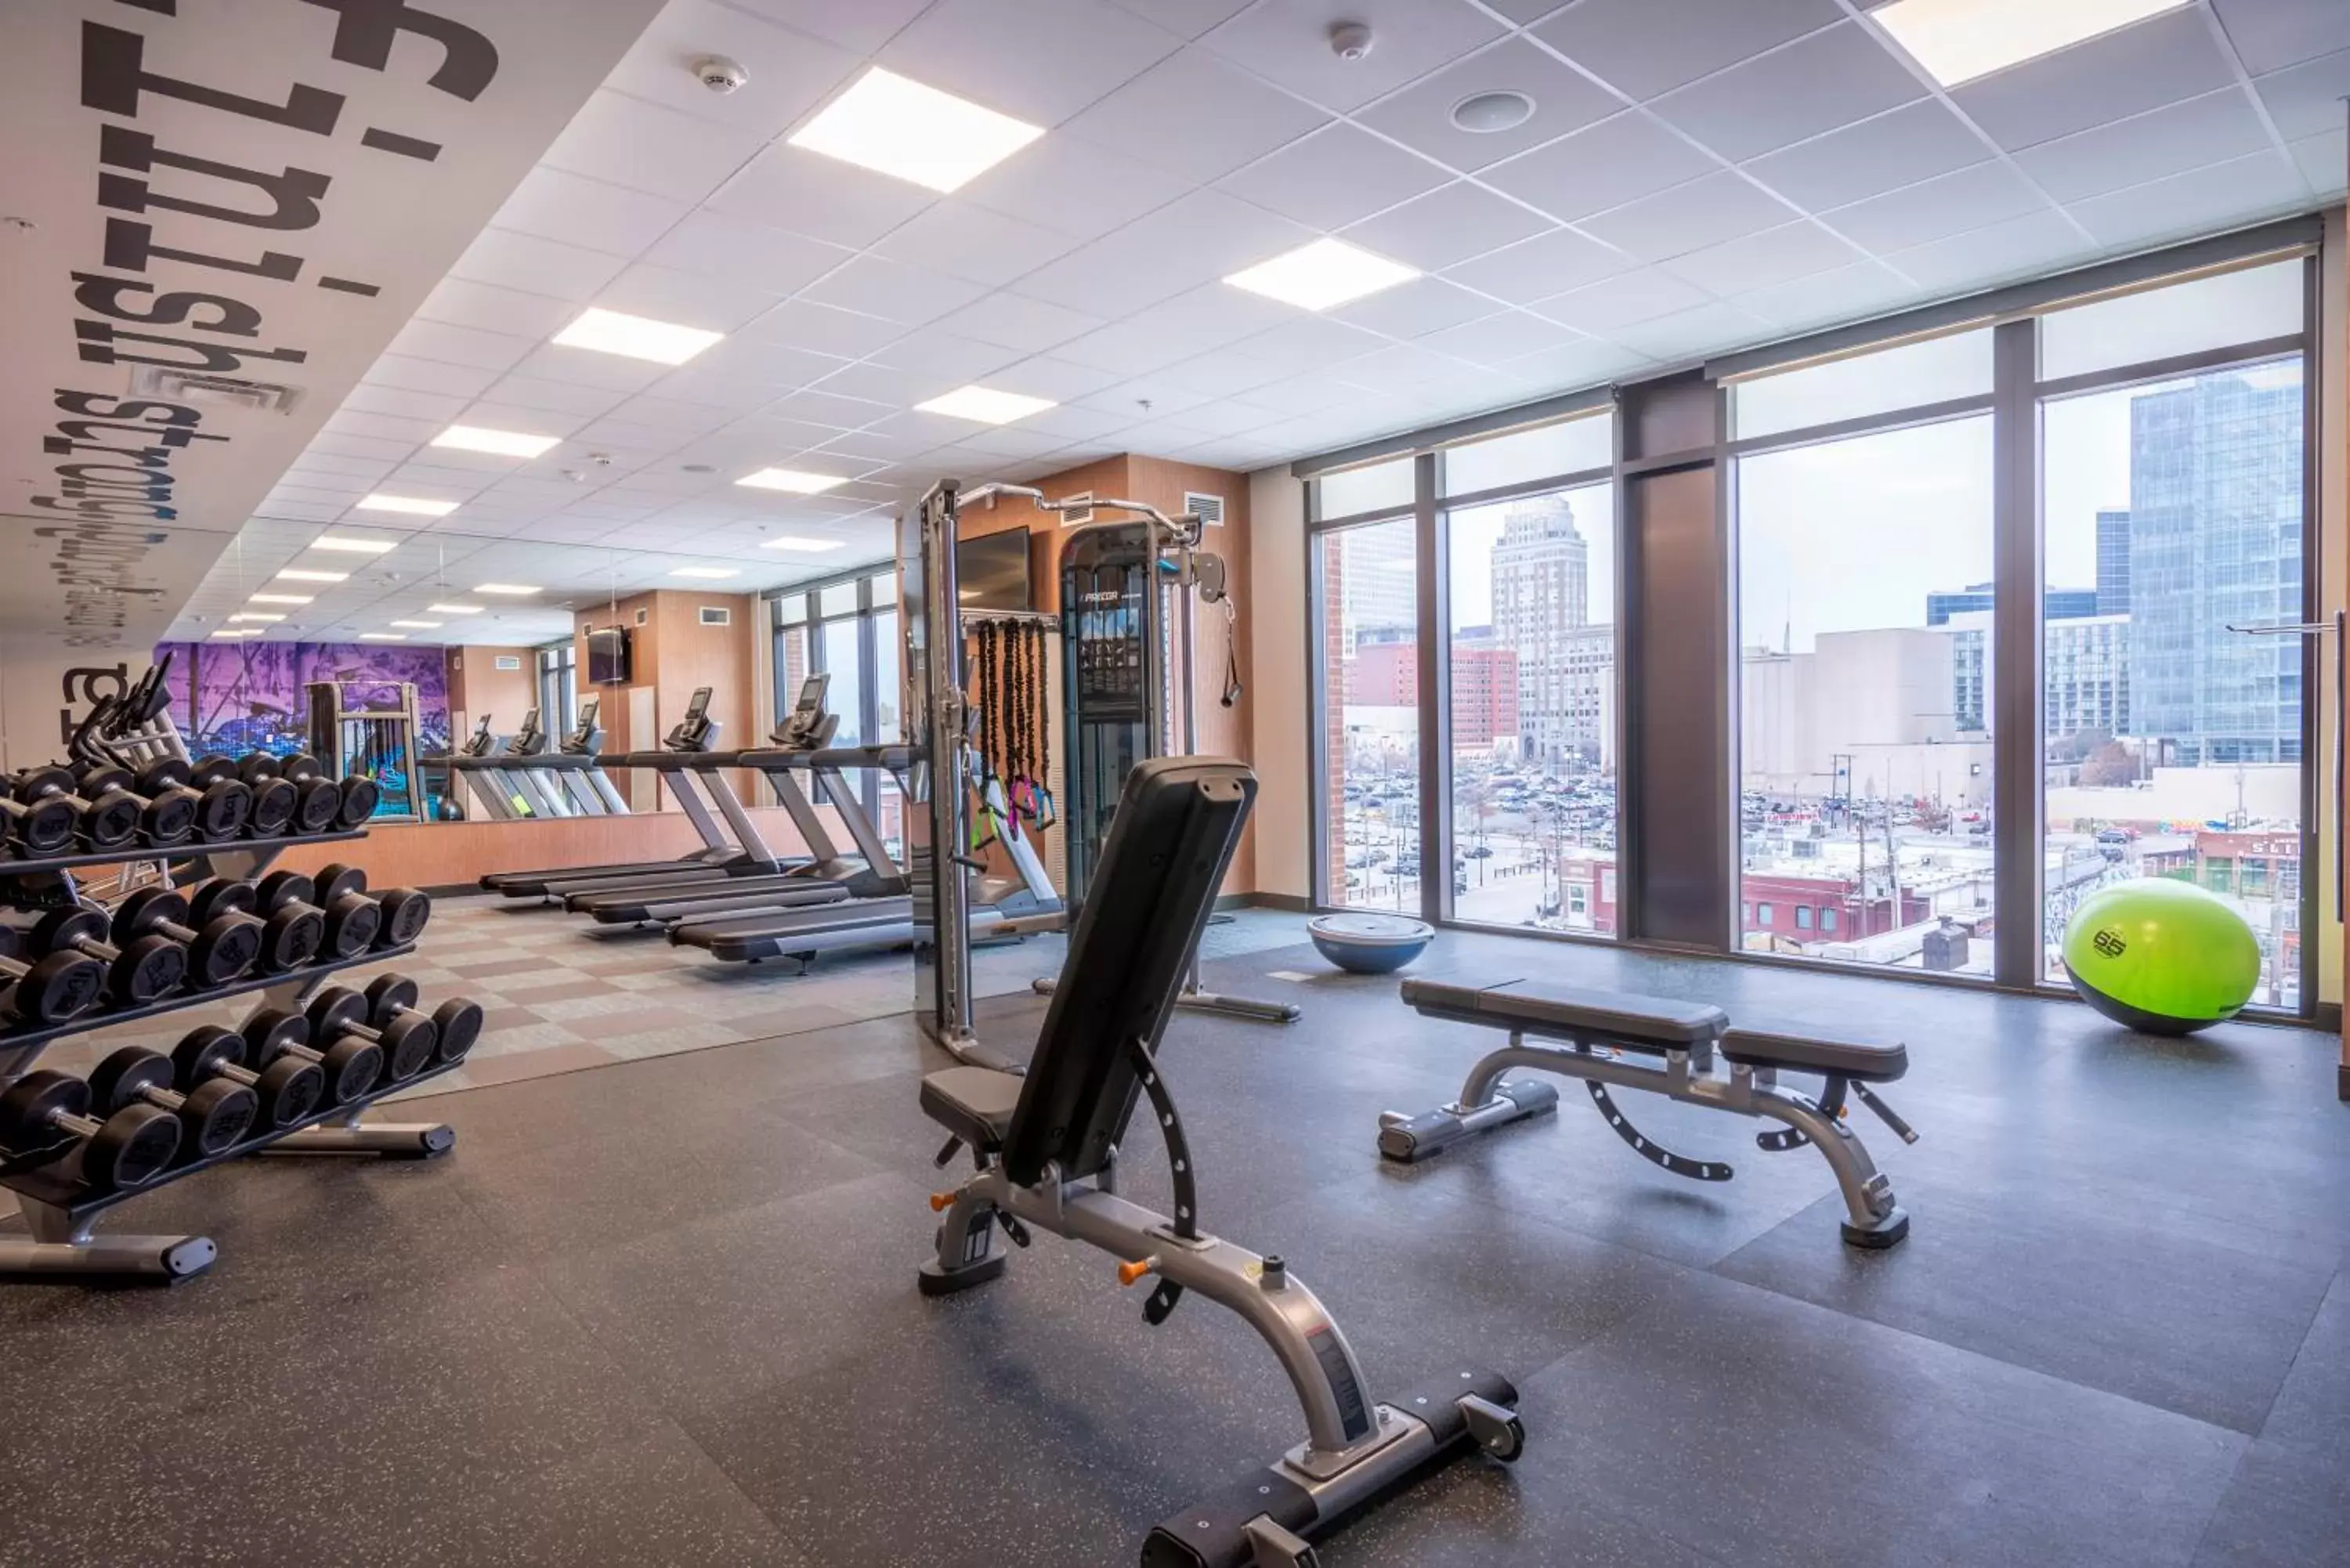 Fitness centre/facilities, Fitness Center/Facilities in Hotel Indigo Tulsa DWTN/Entertainment Area